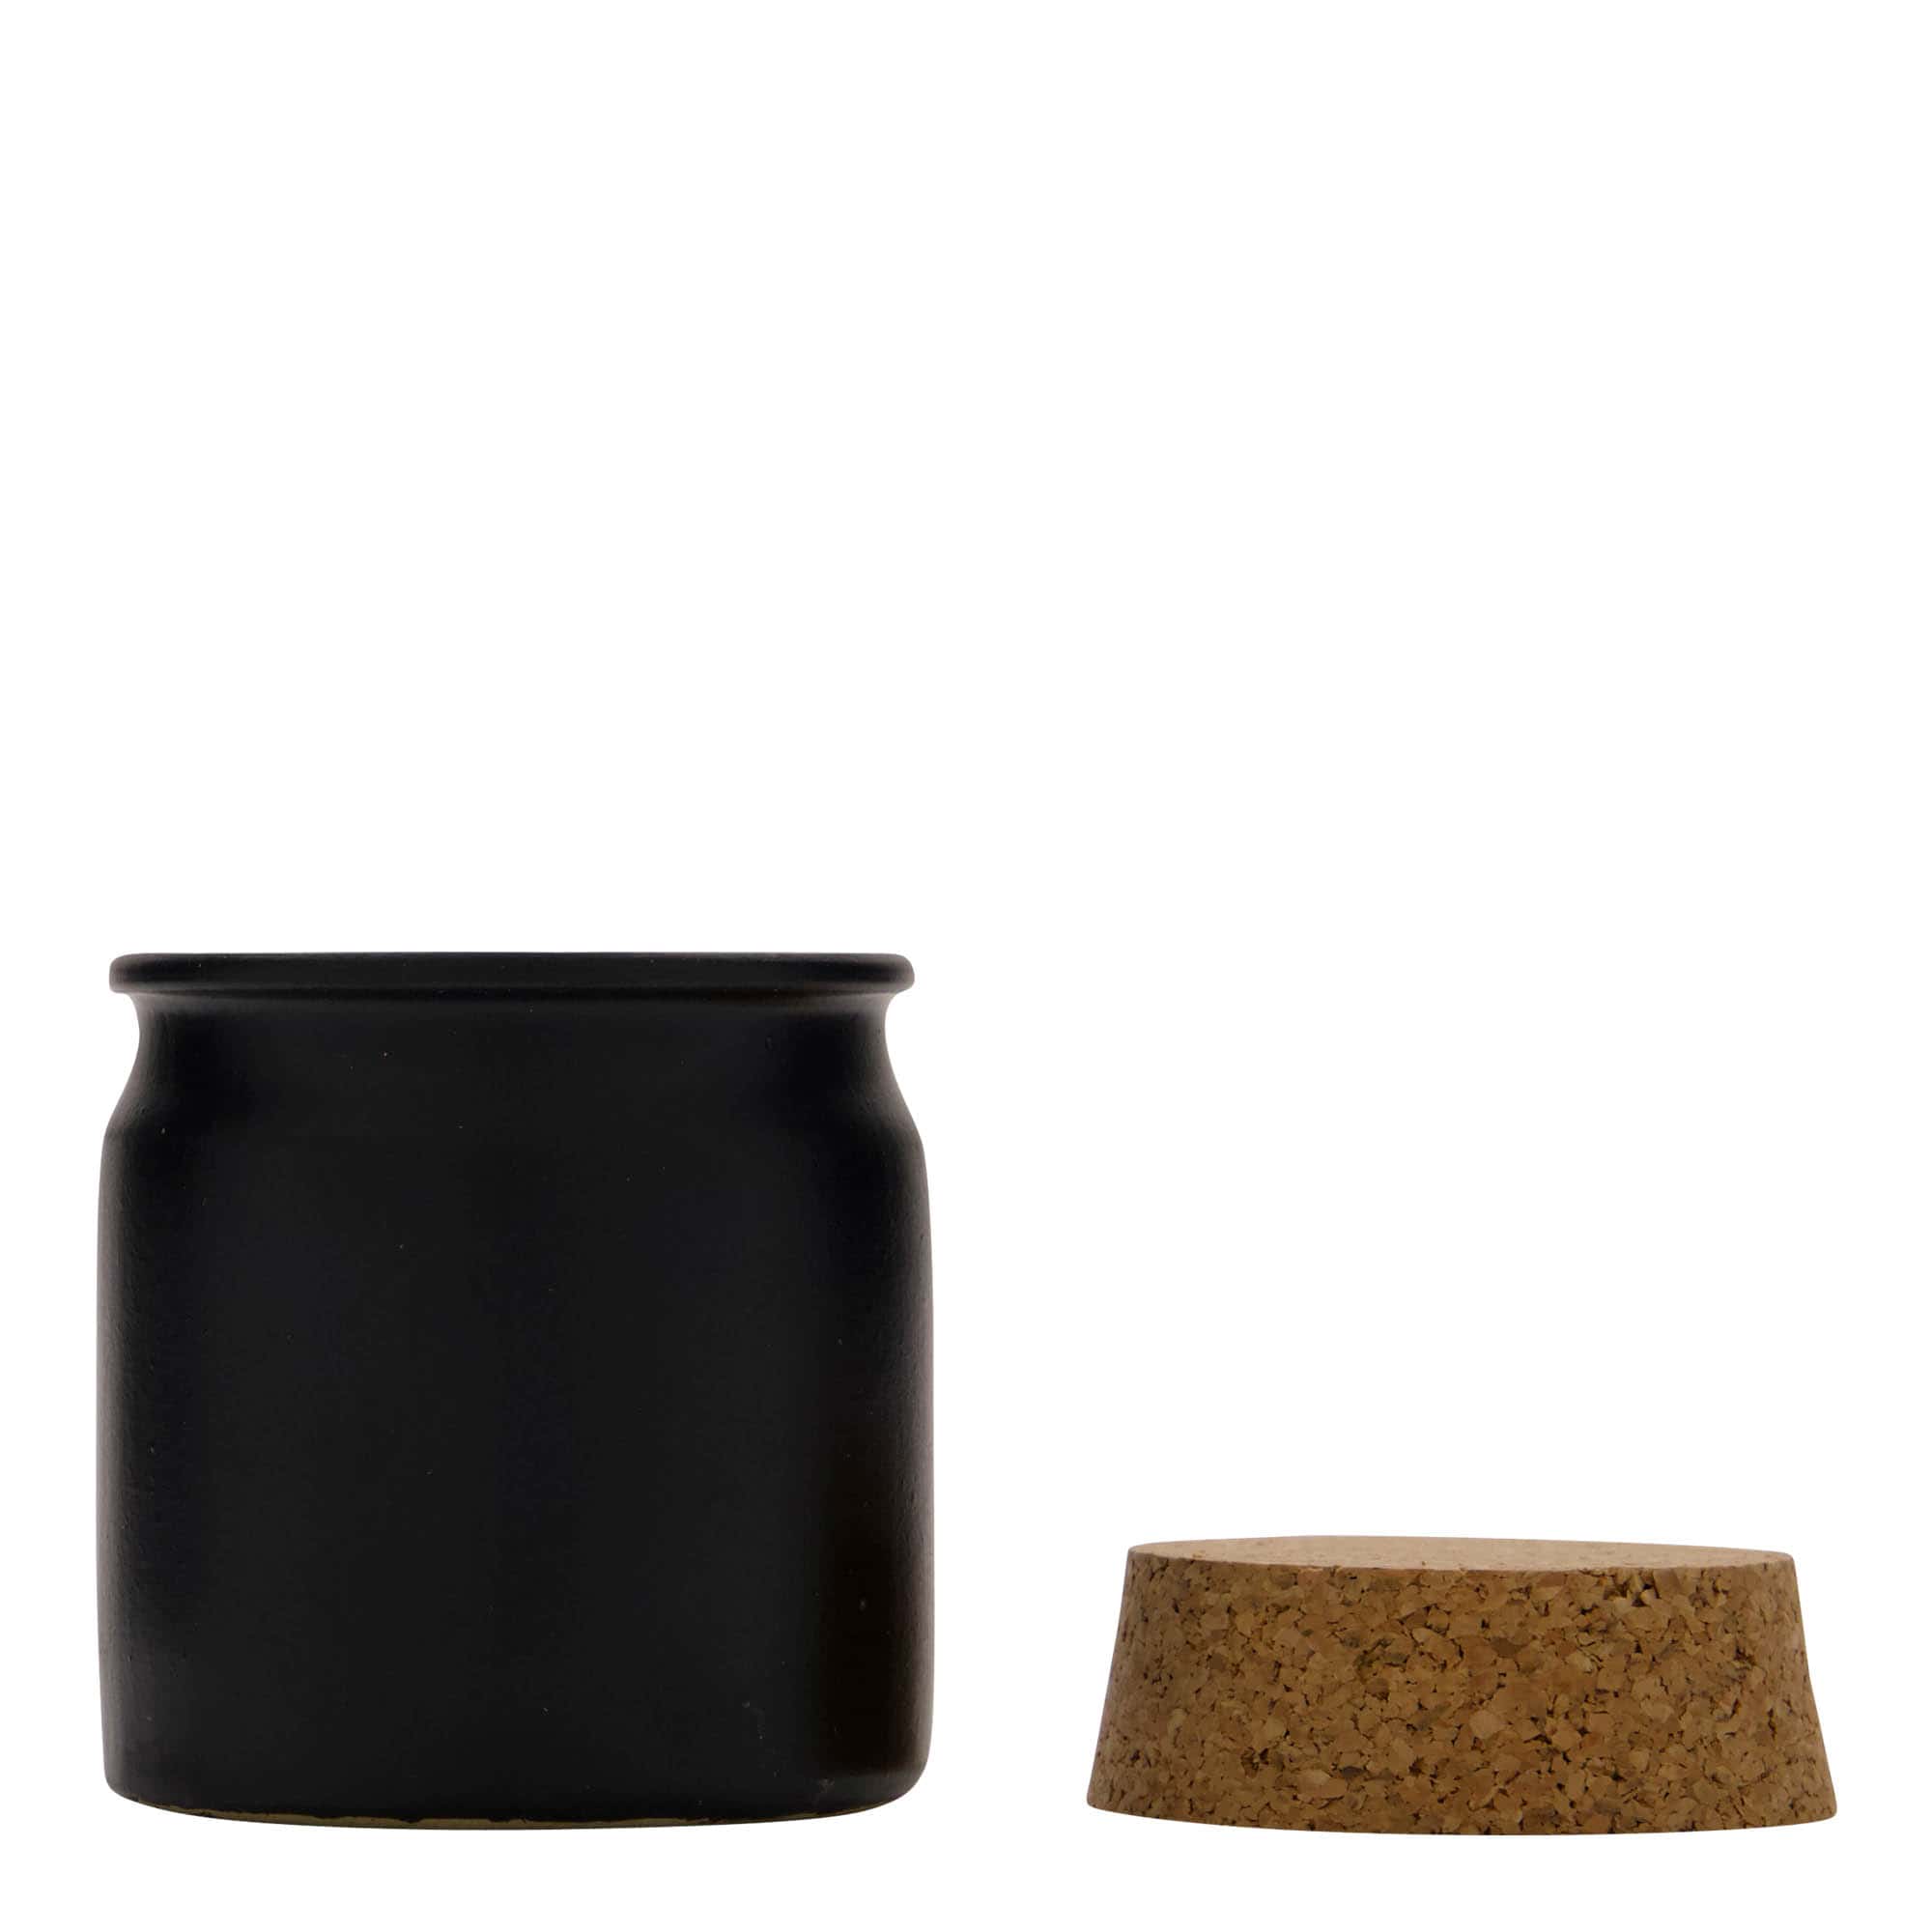 160 ml Vasetto in ceramica/grès, nero, imboccatura: fascetta